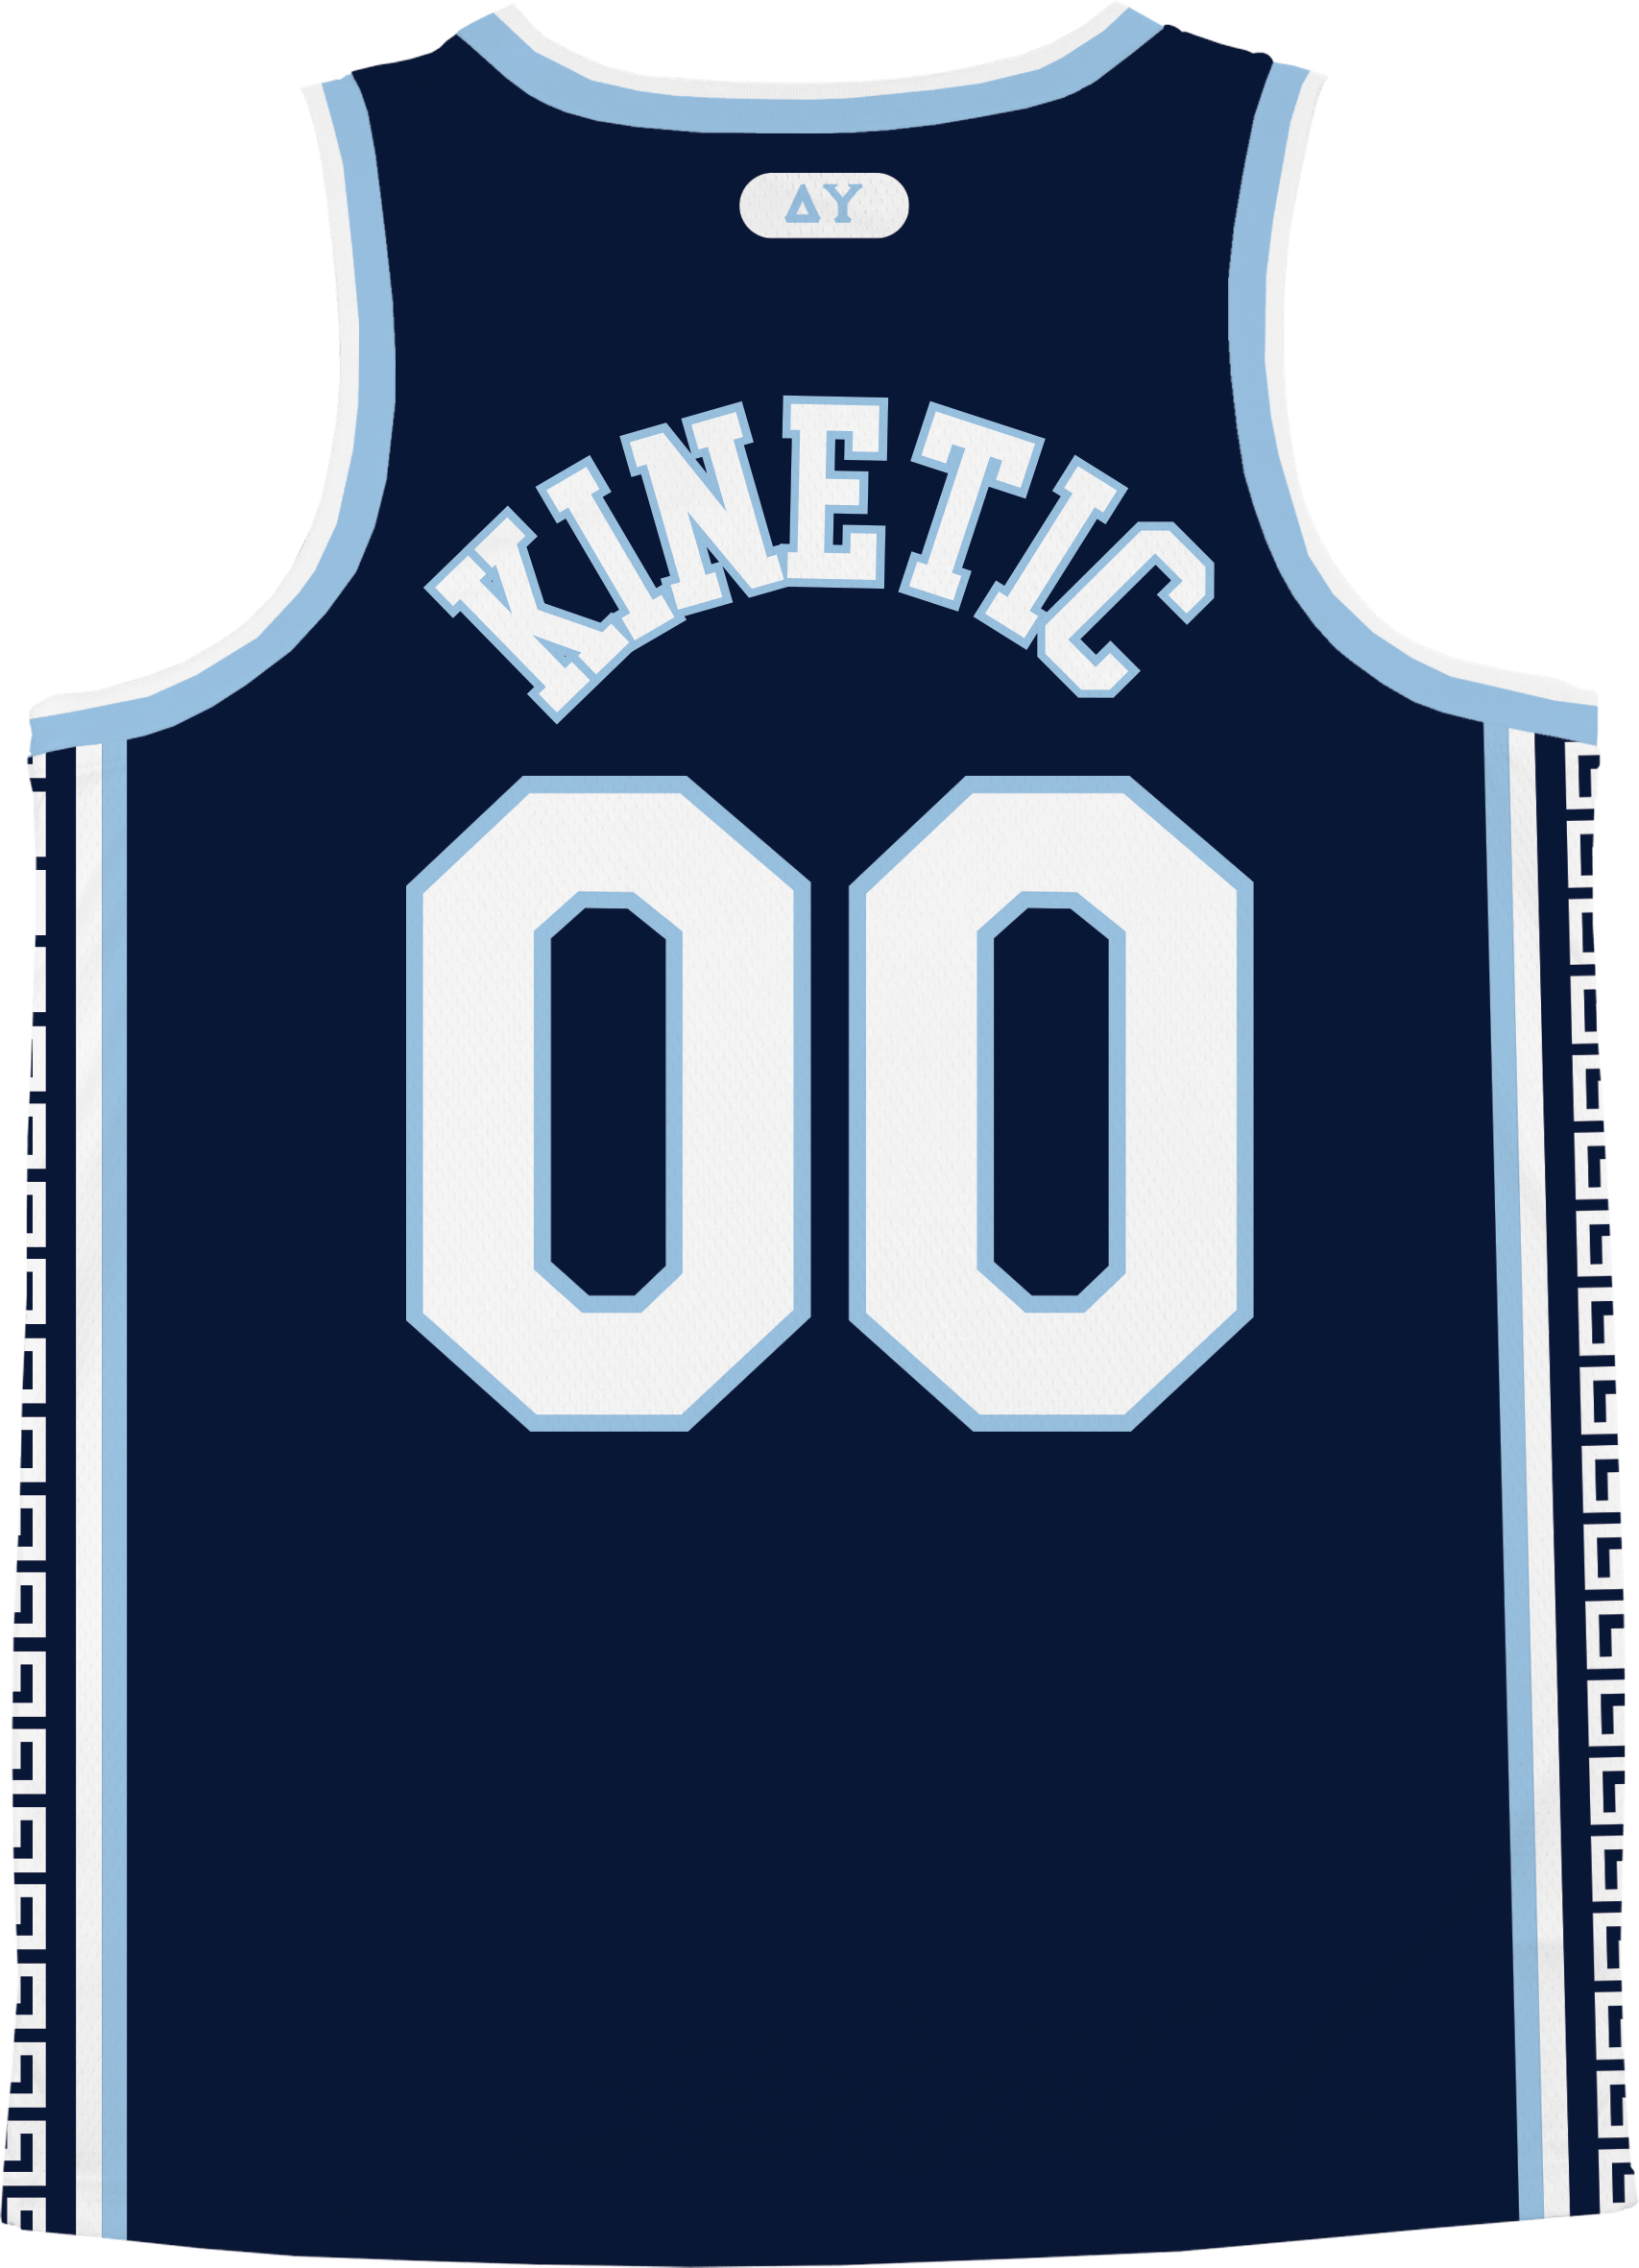 Delta Upsilon - Templar Basketball Jersey - Kinetic Society